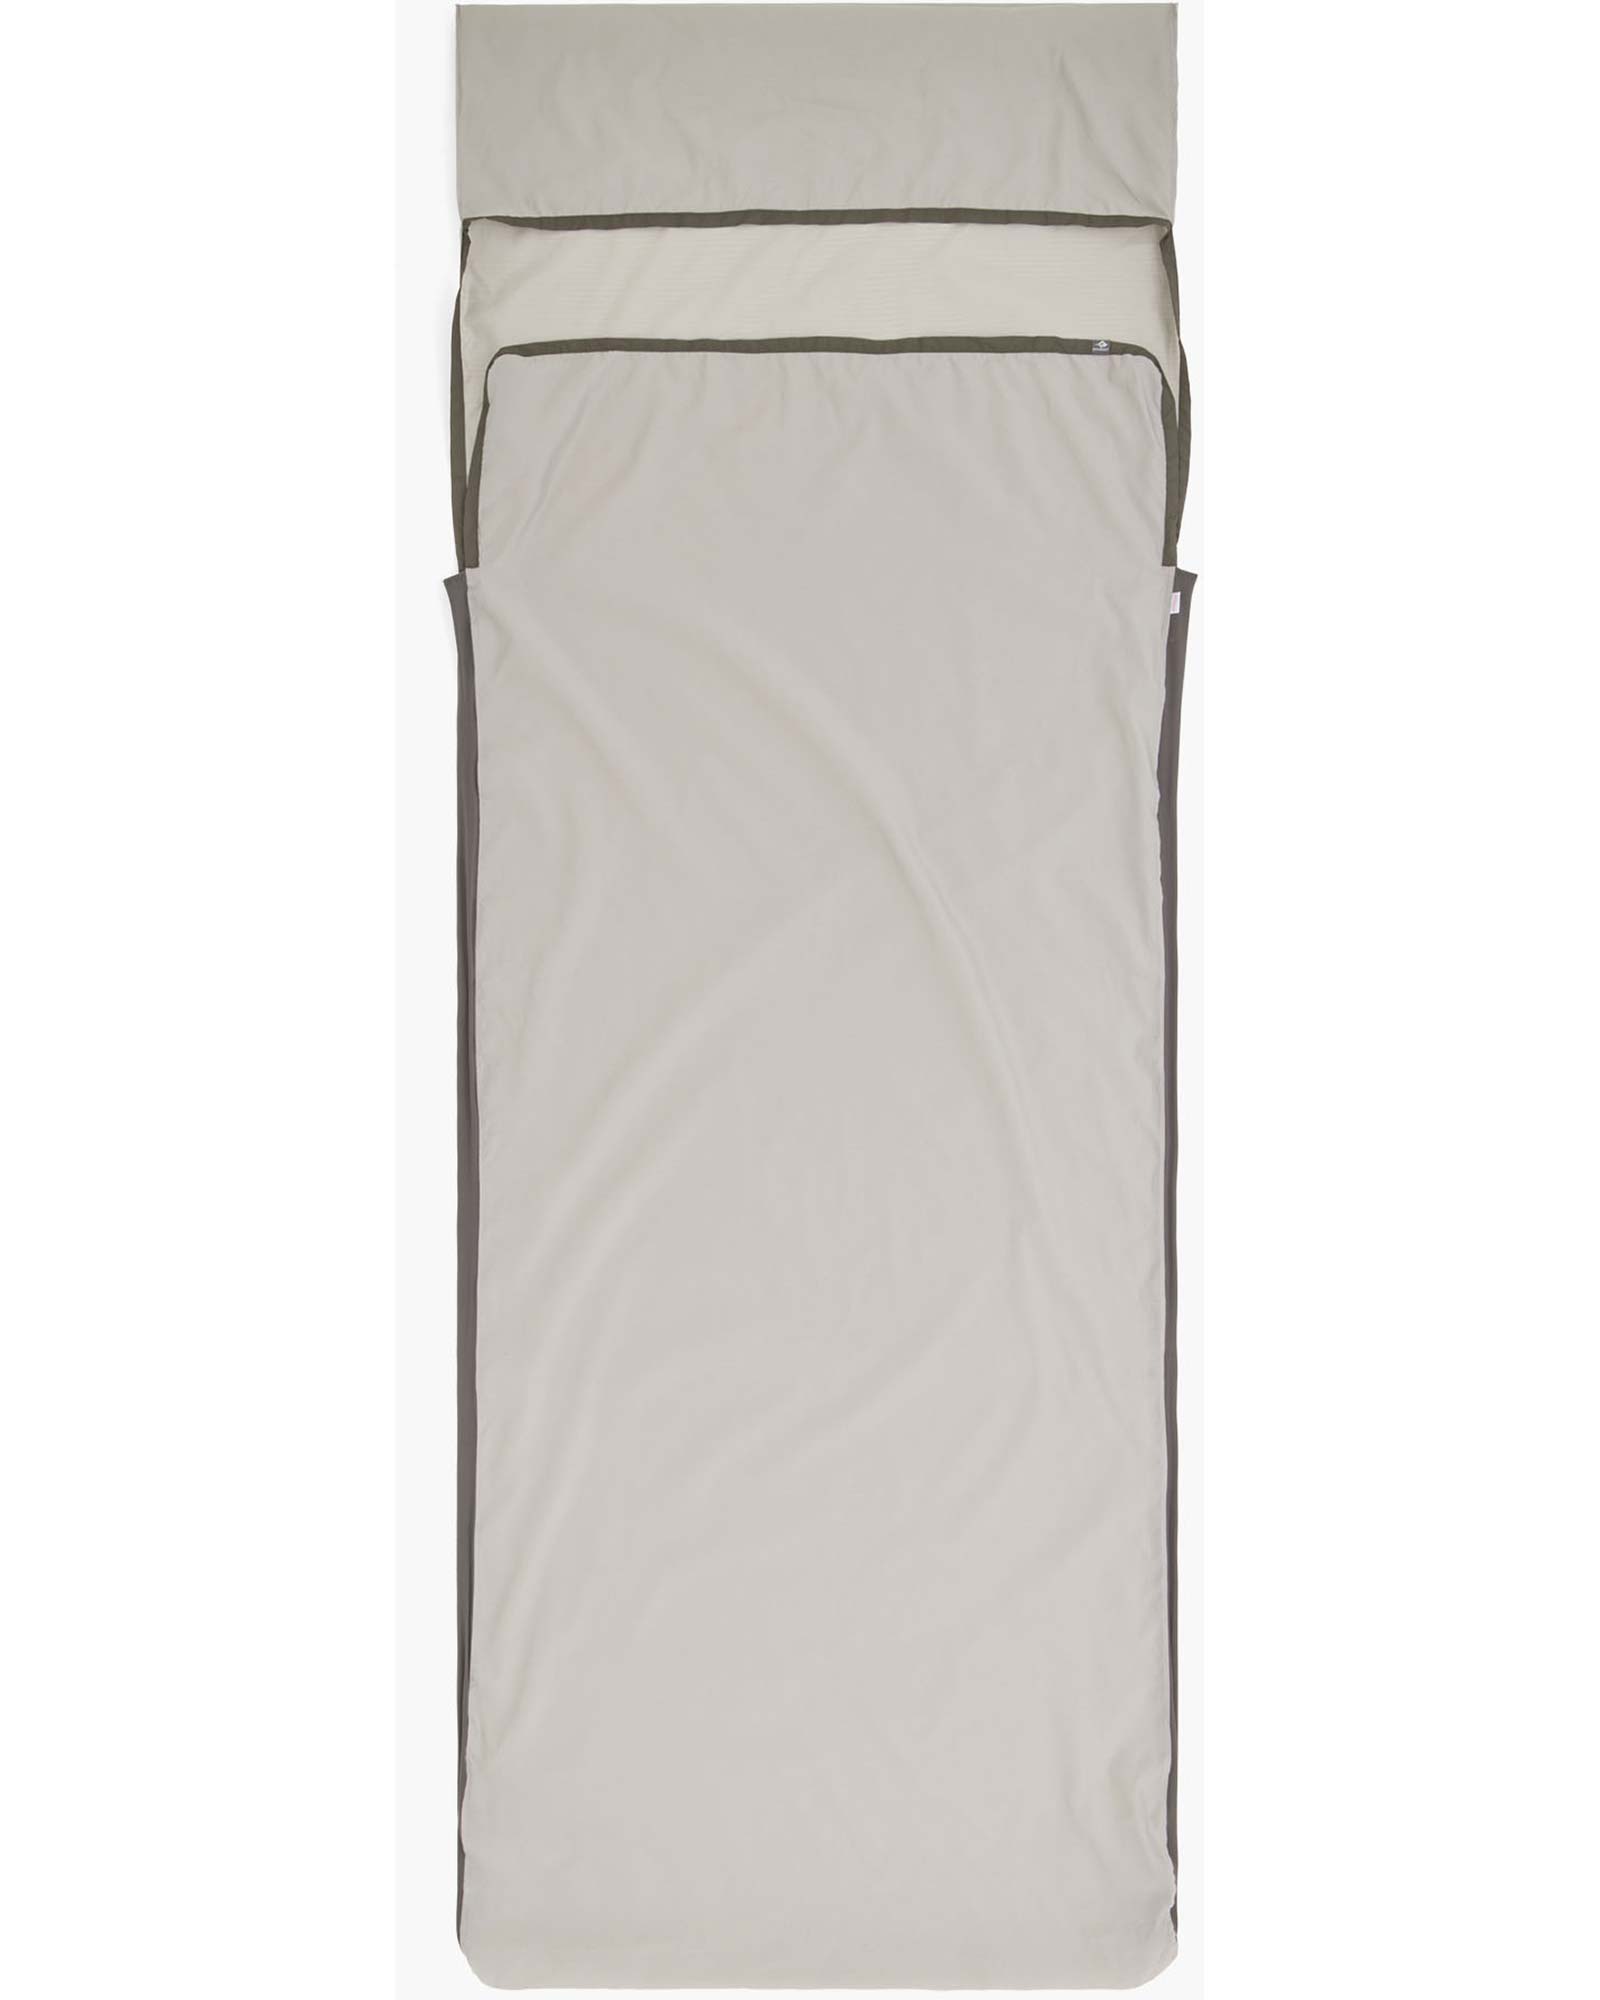 Sea to Summit Silk Blend Liner - Rectangular w/pillow sleeve